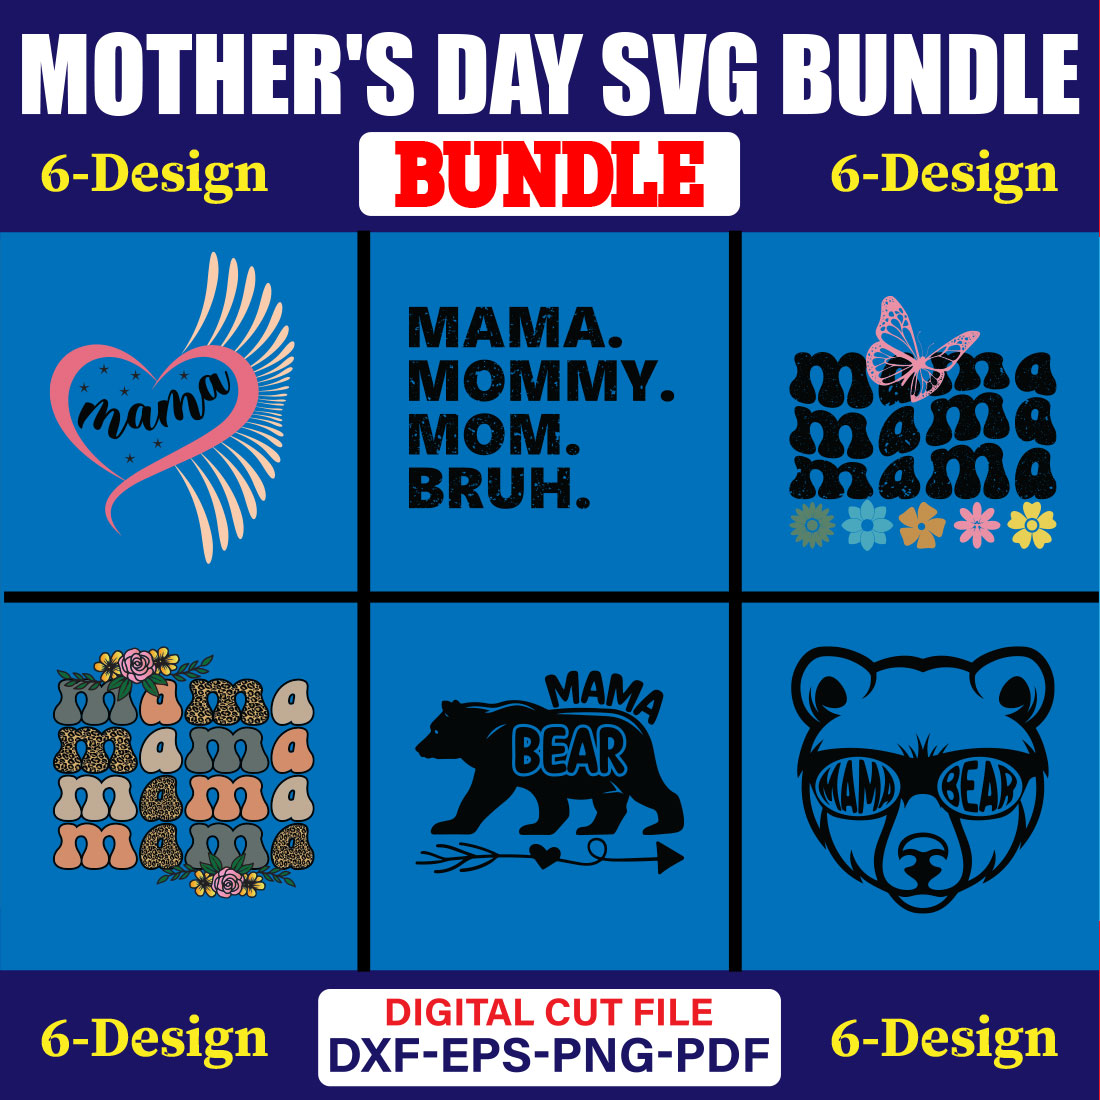 Mother's Day SVG T-shirt Design Bundle Vol-46 cover image.